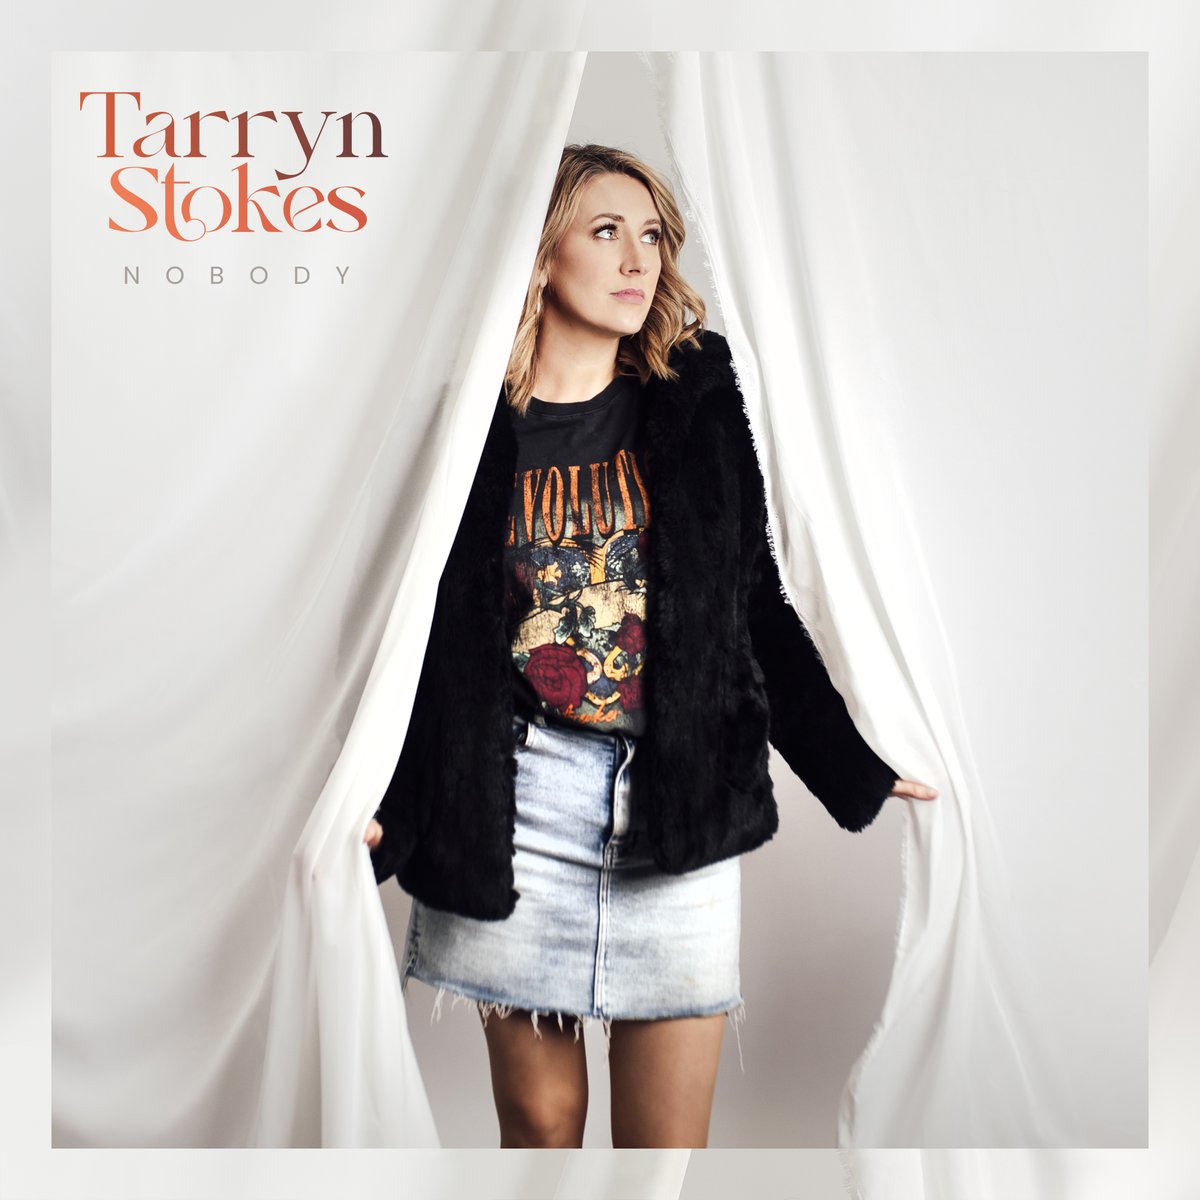 What a hit Tarryn! An incredible Top 4 original single. Stream 'Nobody' now ➡️ open.spotify.com/album/6OgFwyws…